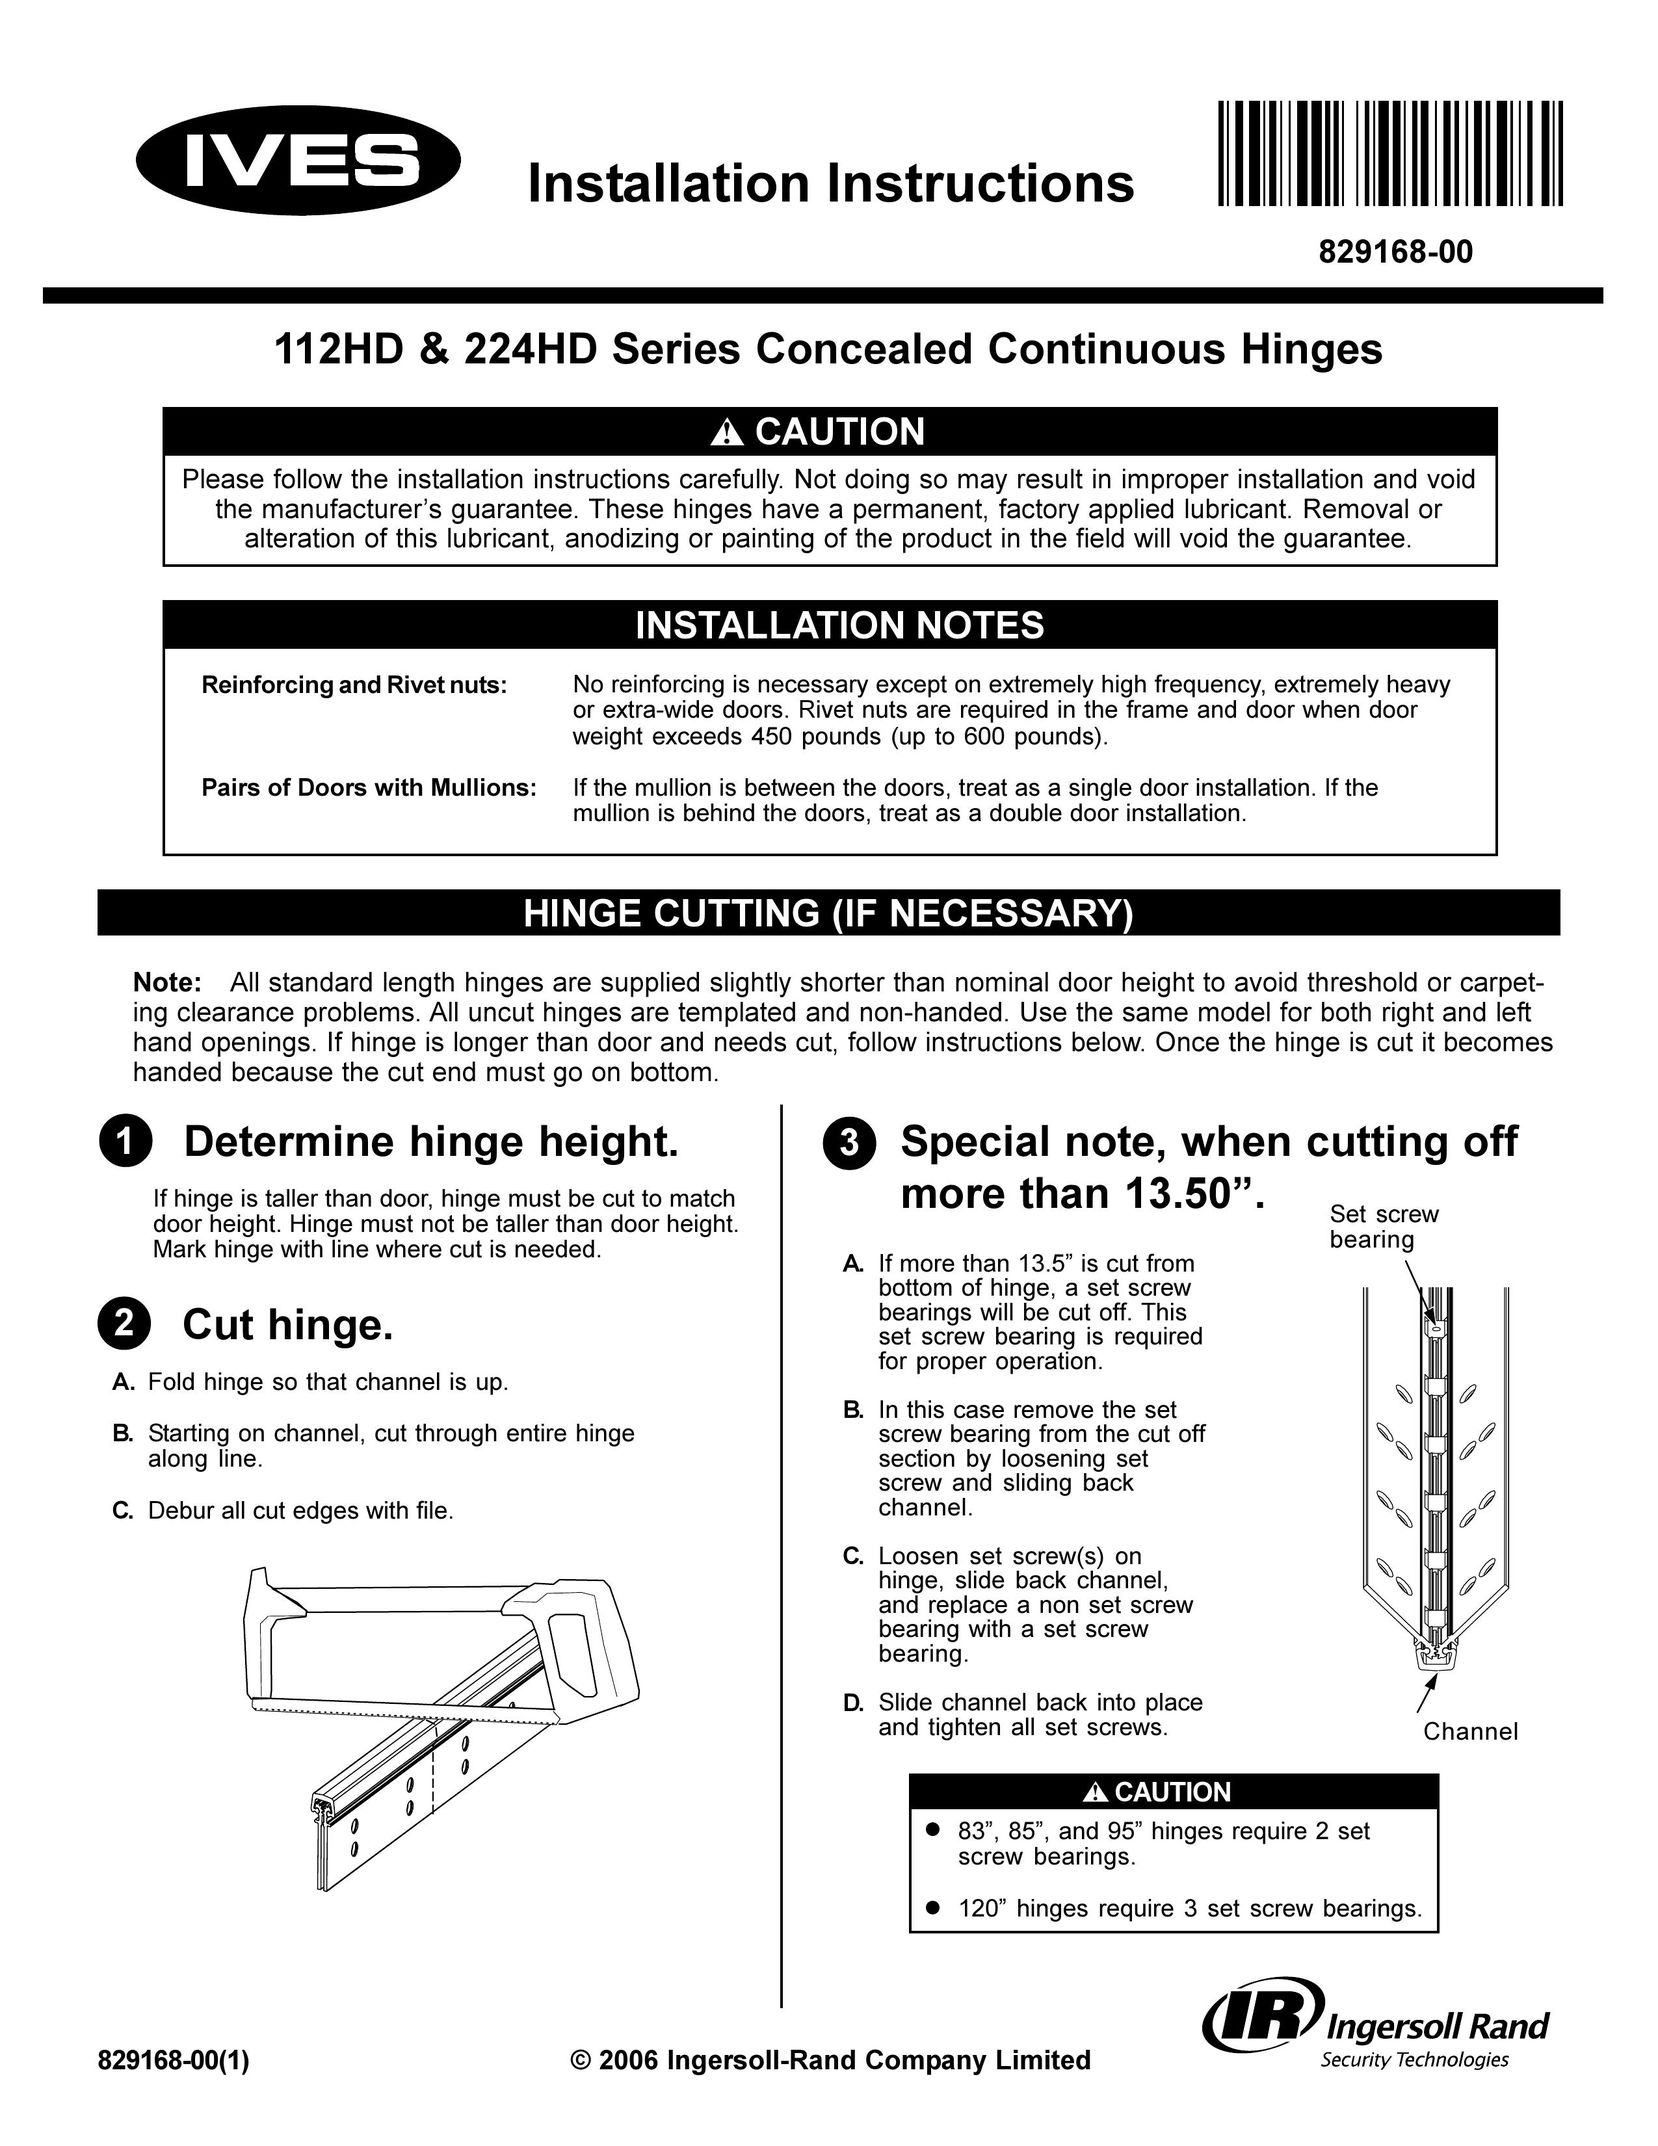 Ives 224HD Series Door User Manual